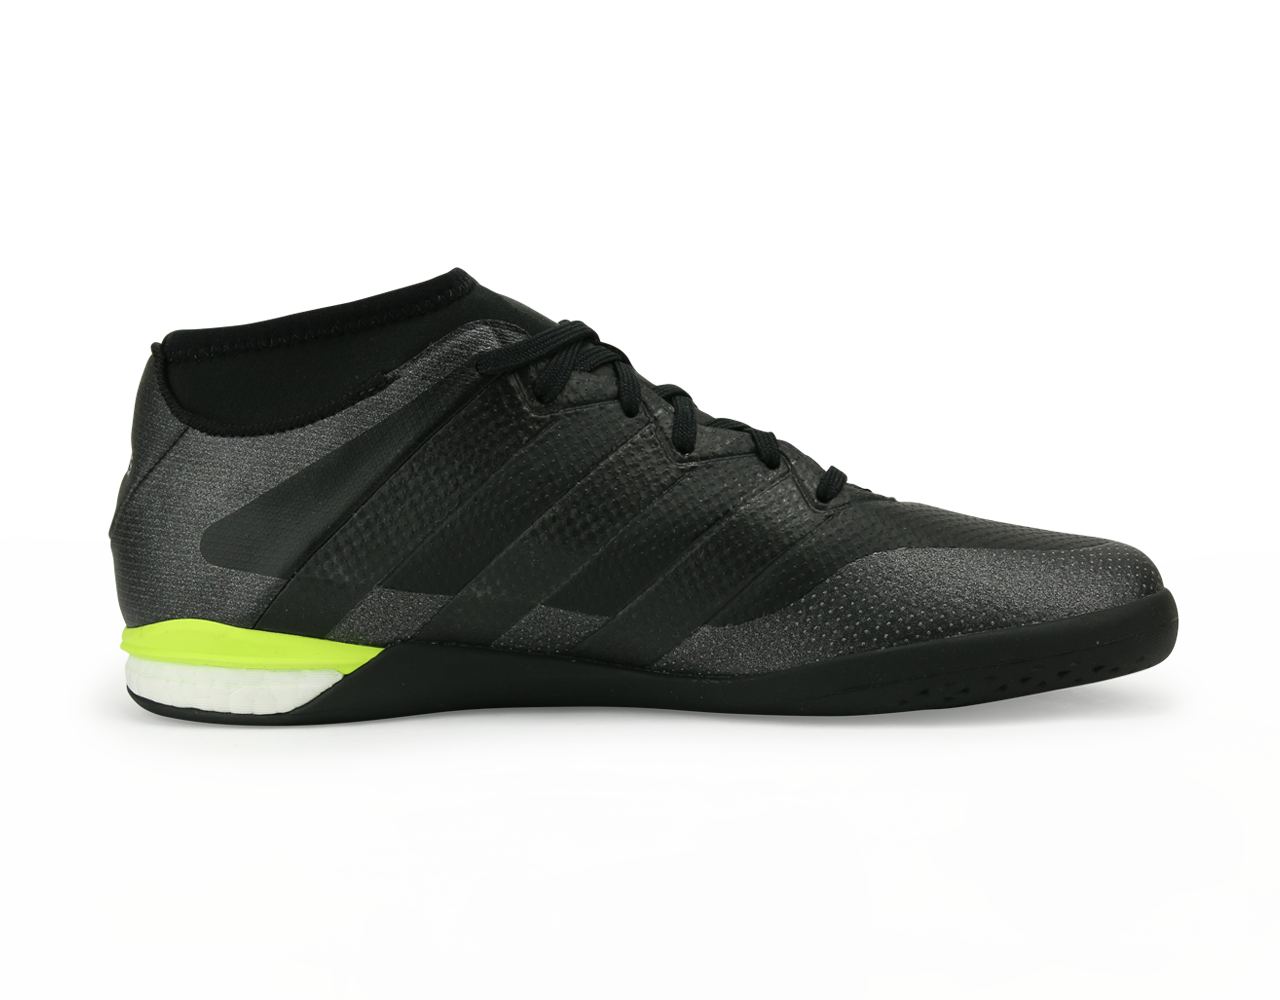 adidas Men's ACE 16.1 Street Indoor Soccer Shoes Core Black/Solar Yellow